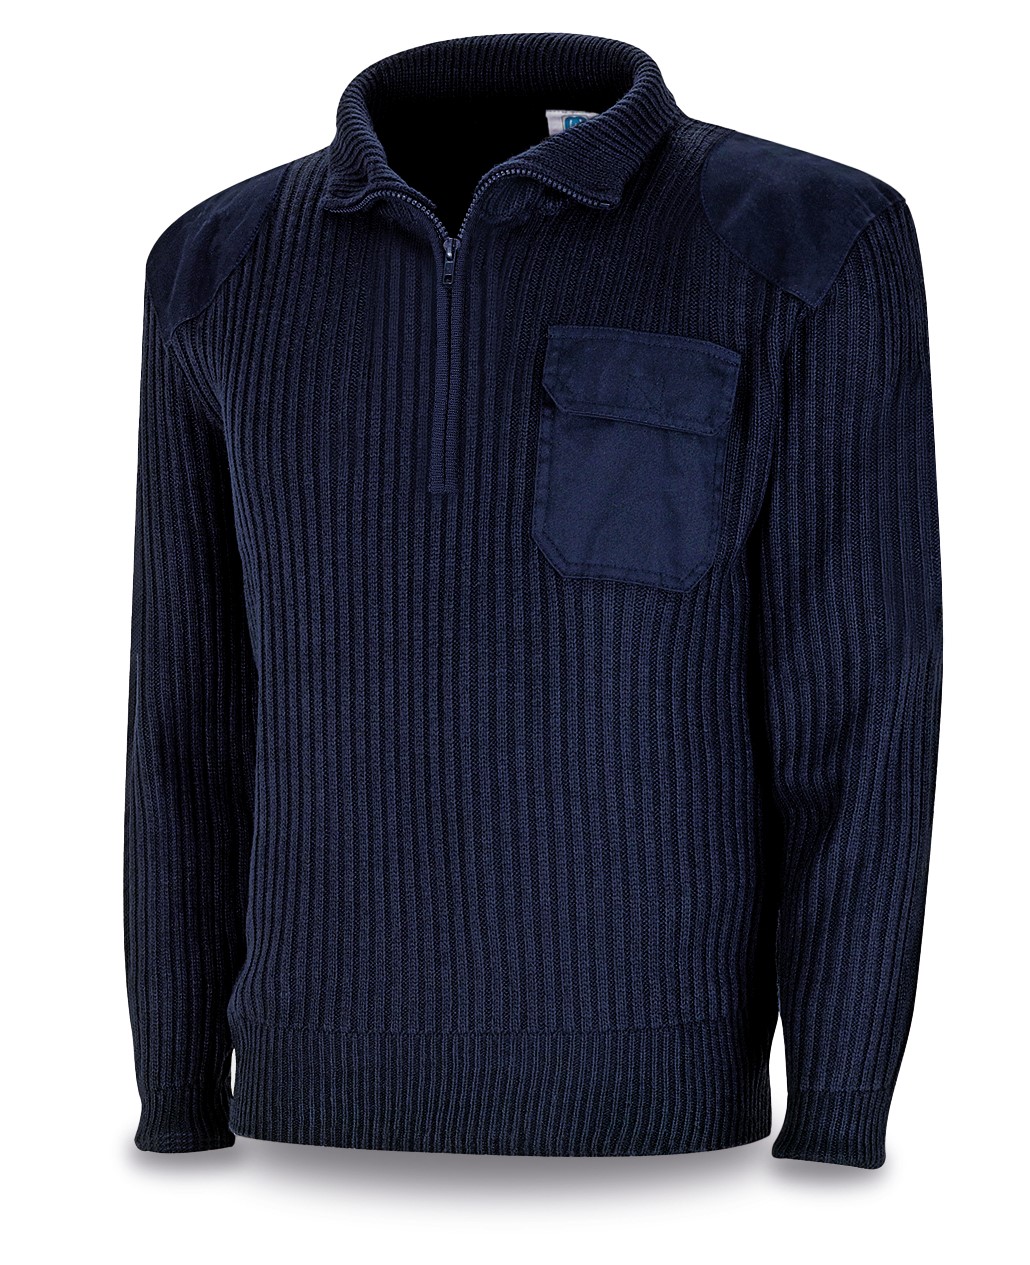 1288-JCA Pluie et Froid Jerseys - Sweat-shirts Pull type police bleu marine 450 gr.